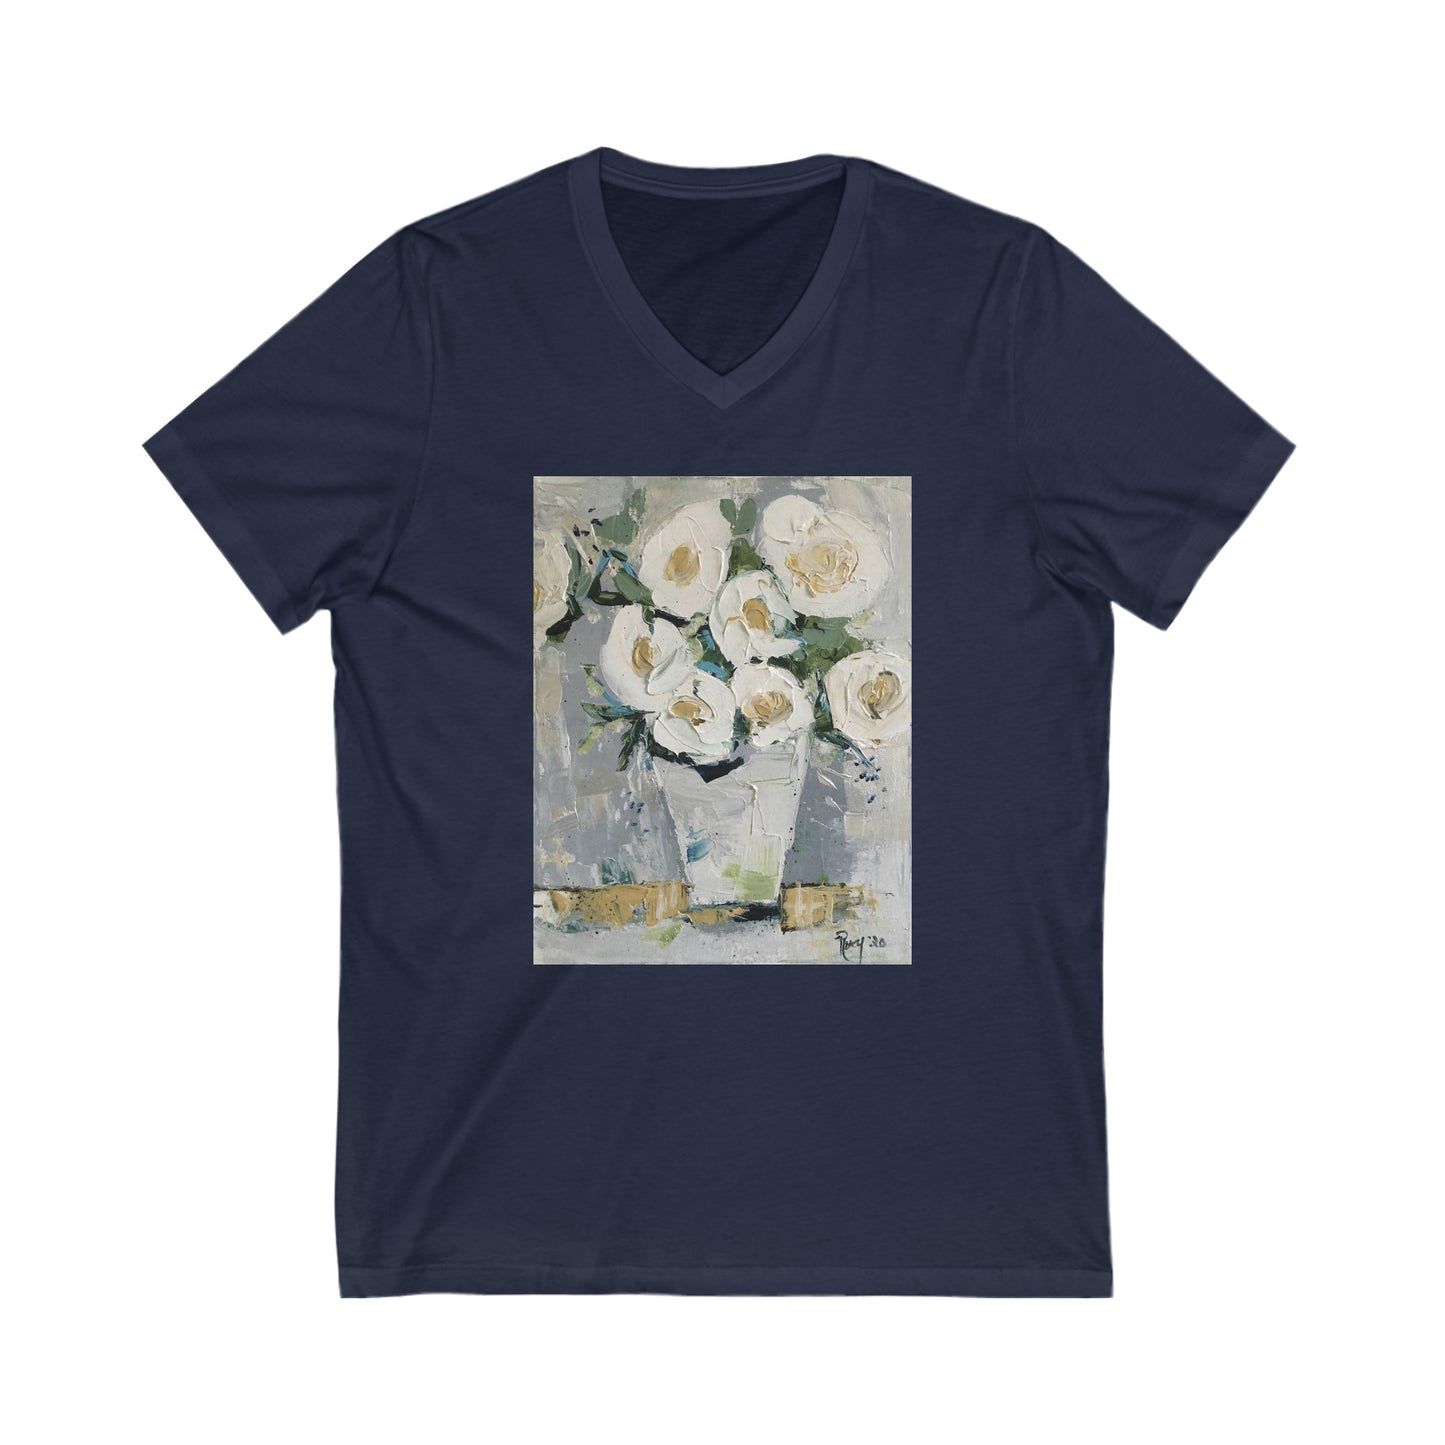 Shabby Roses-Camiseta unisex de manga corta con cuello en V